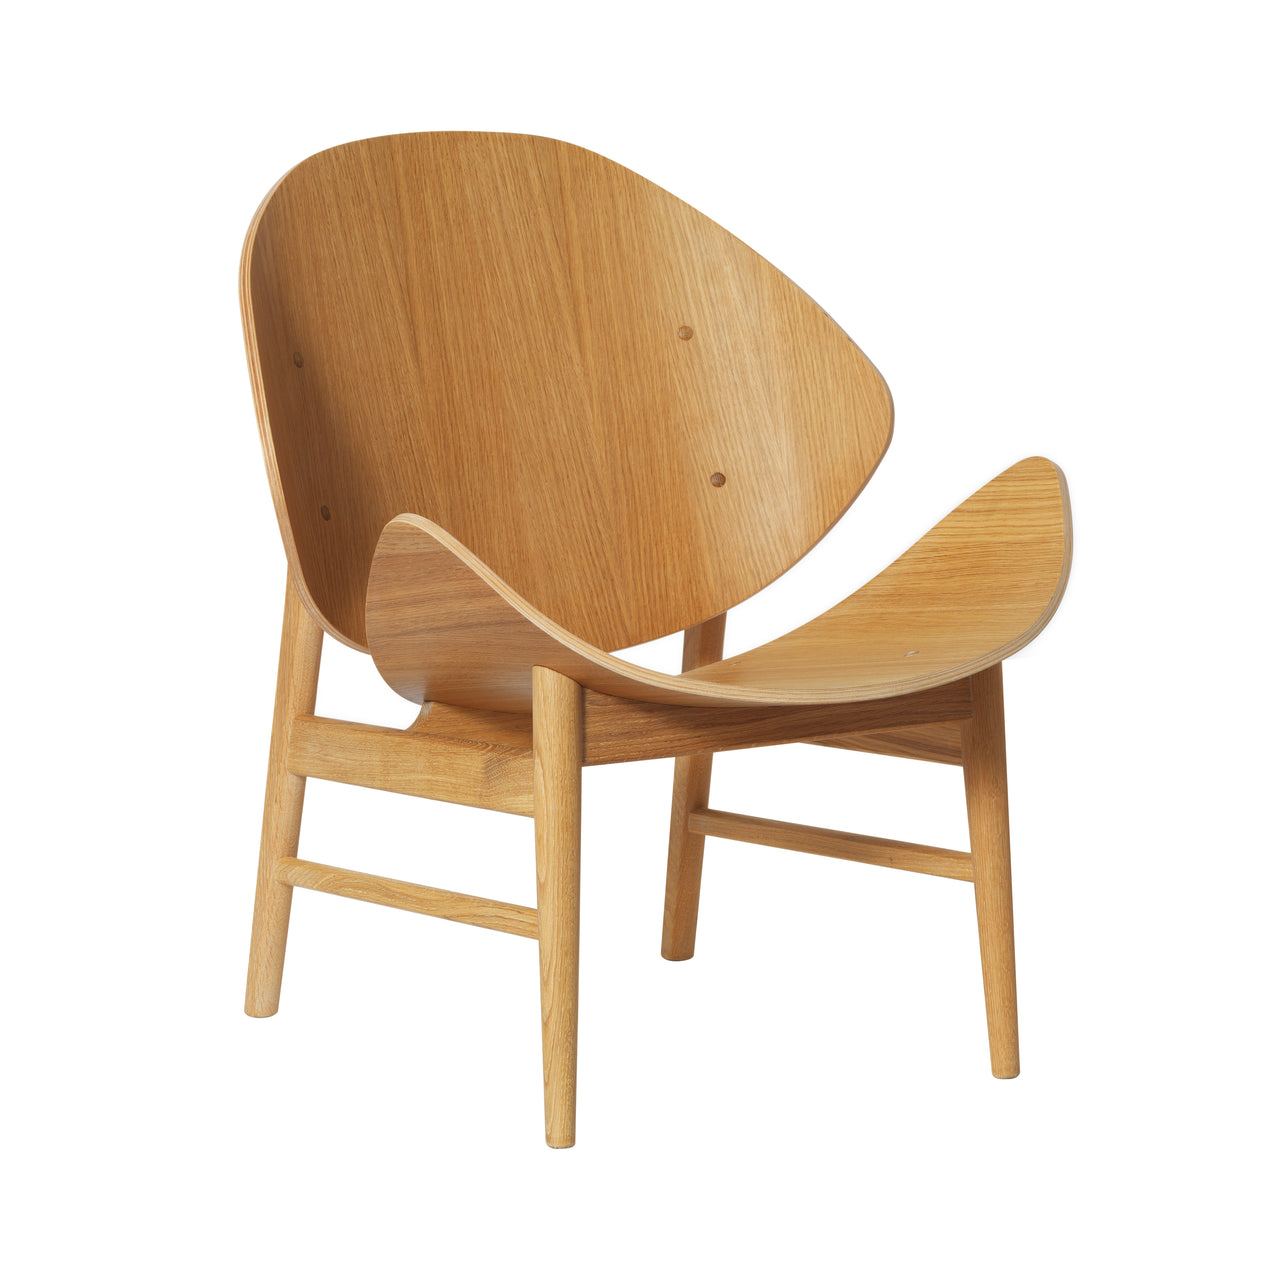 The Orange Lounge Chair: White Oiled Oak